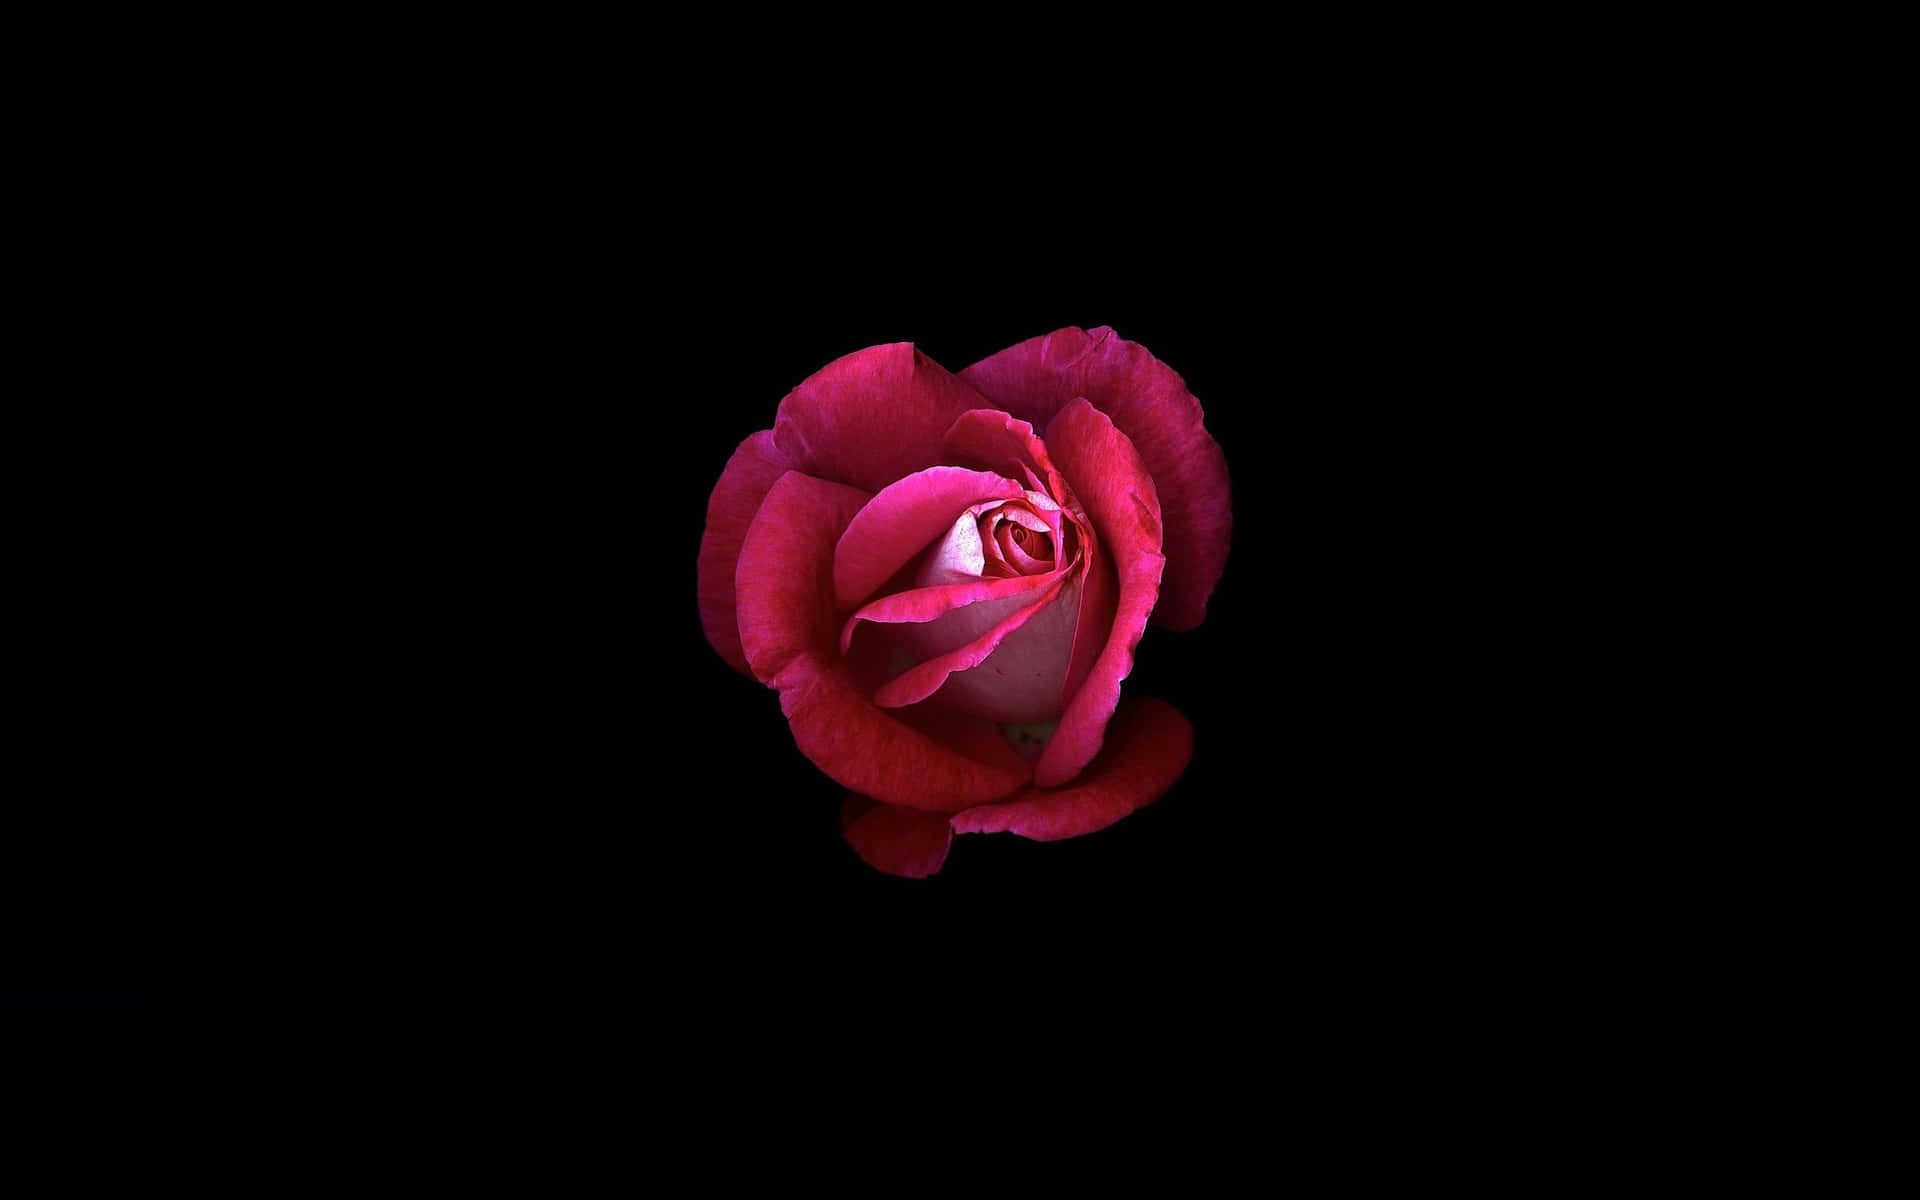 Blooming Red Roses Laptop Theme Wallpaper